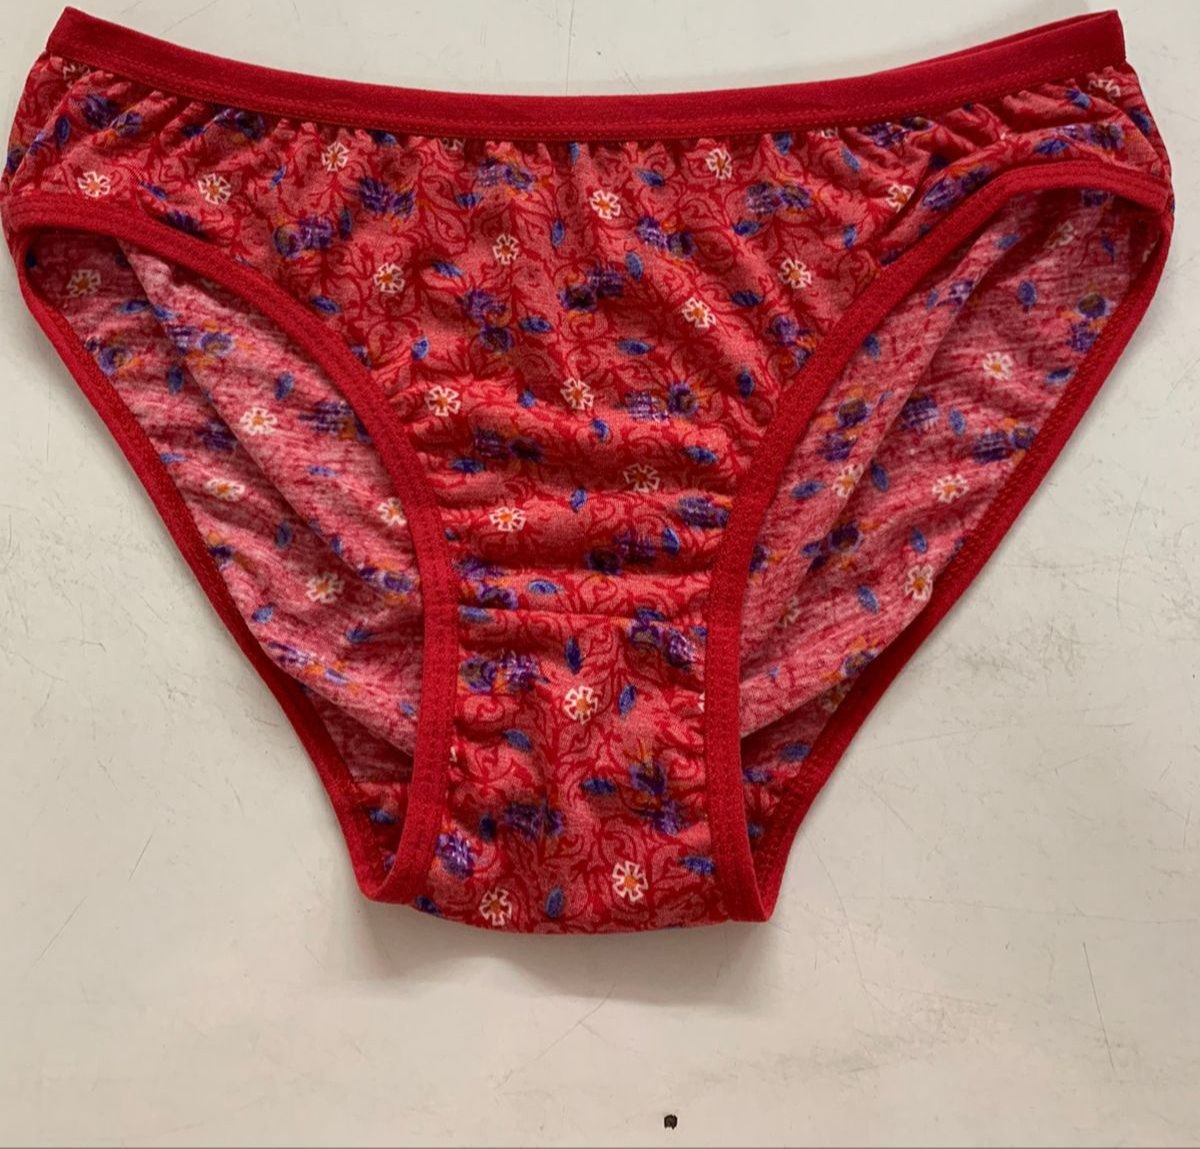 alexandra davidescu recommends ladies underwear pic pic